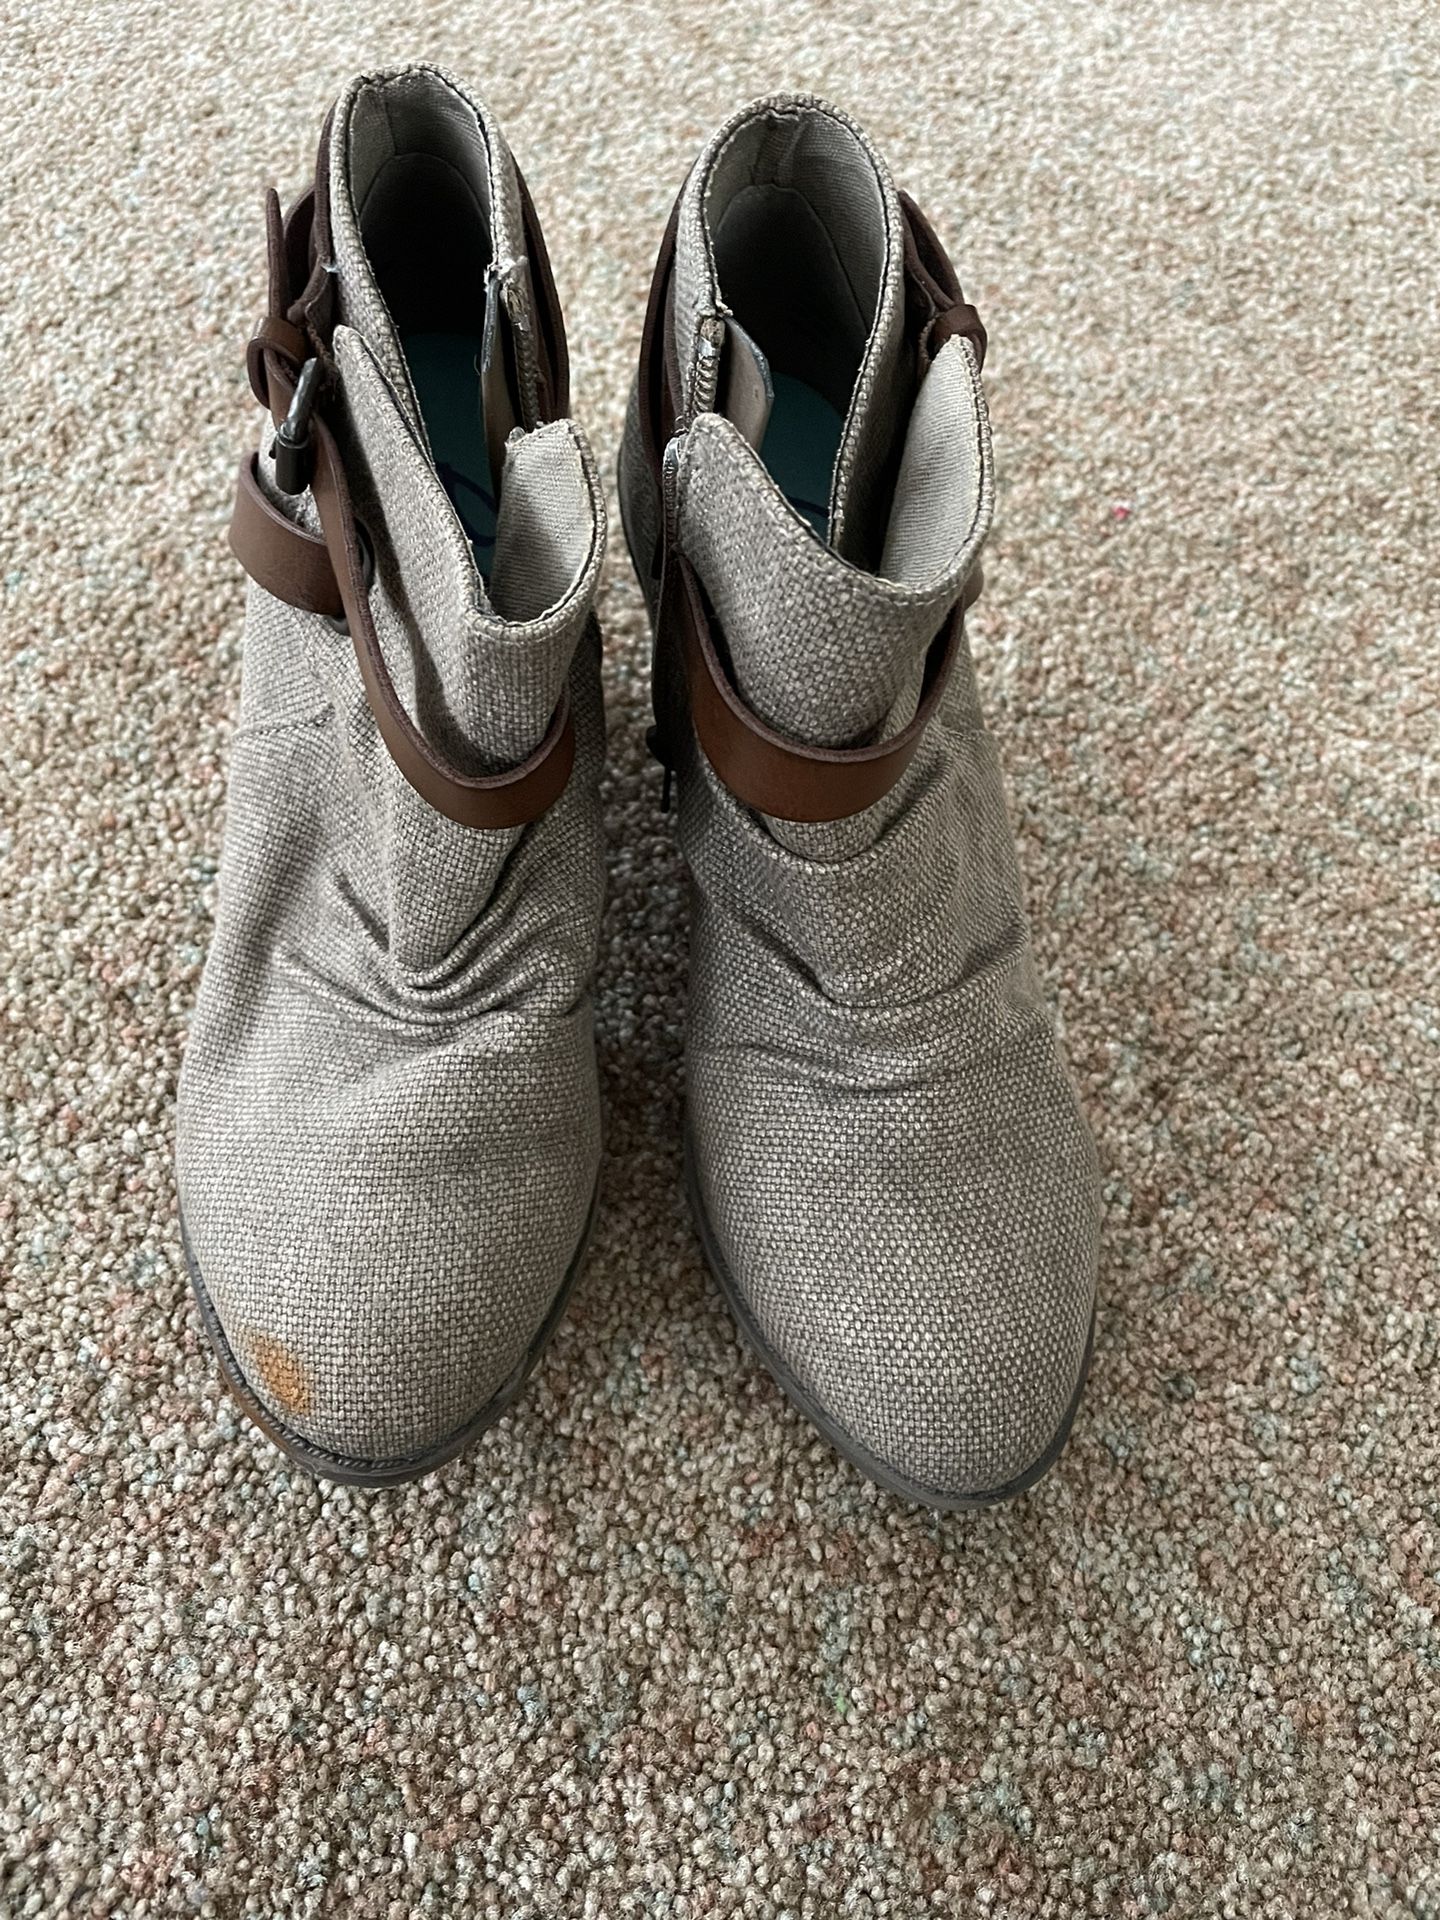 Blowfish Brown Heel Boots